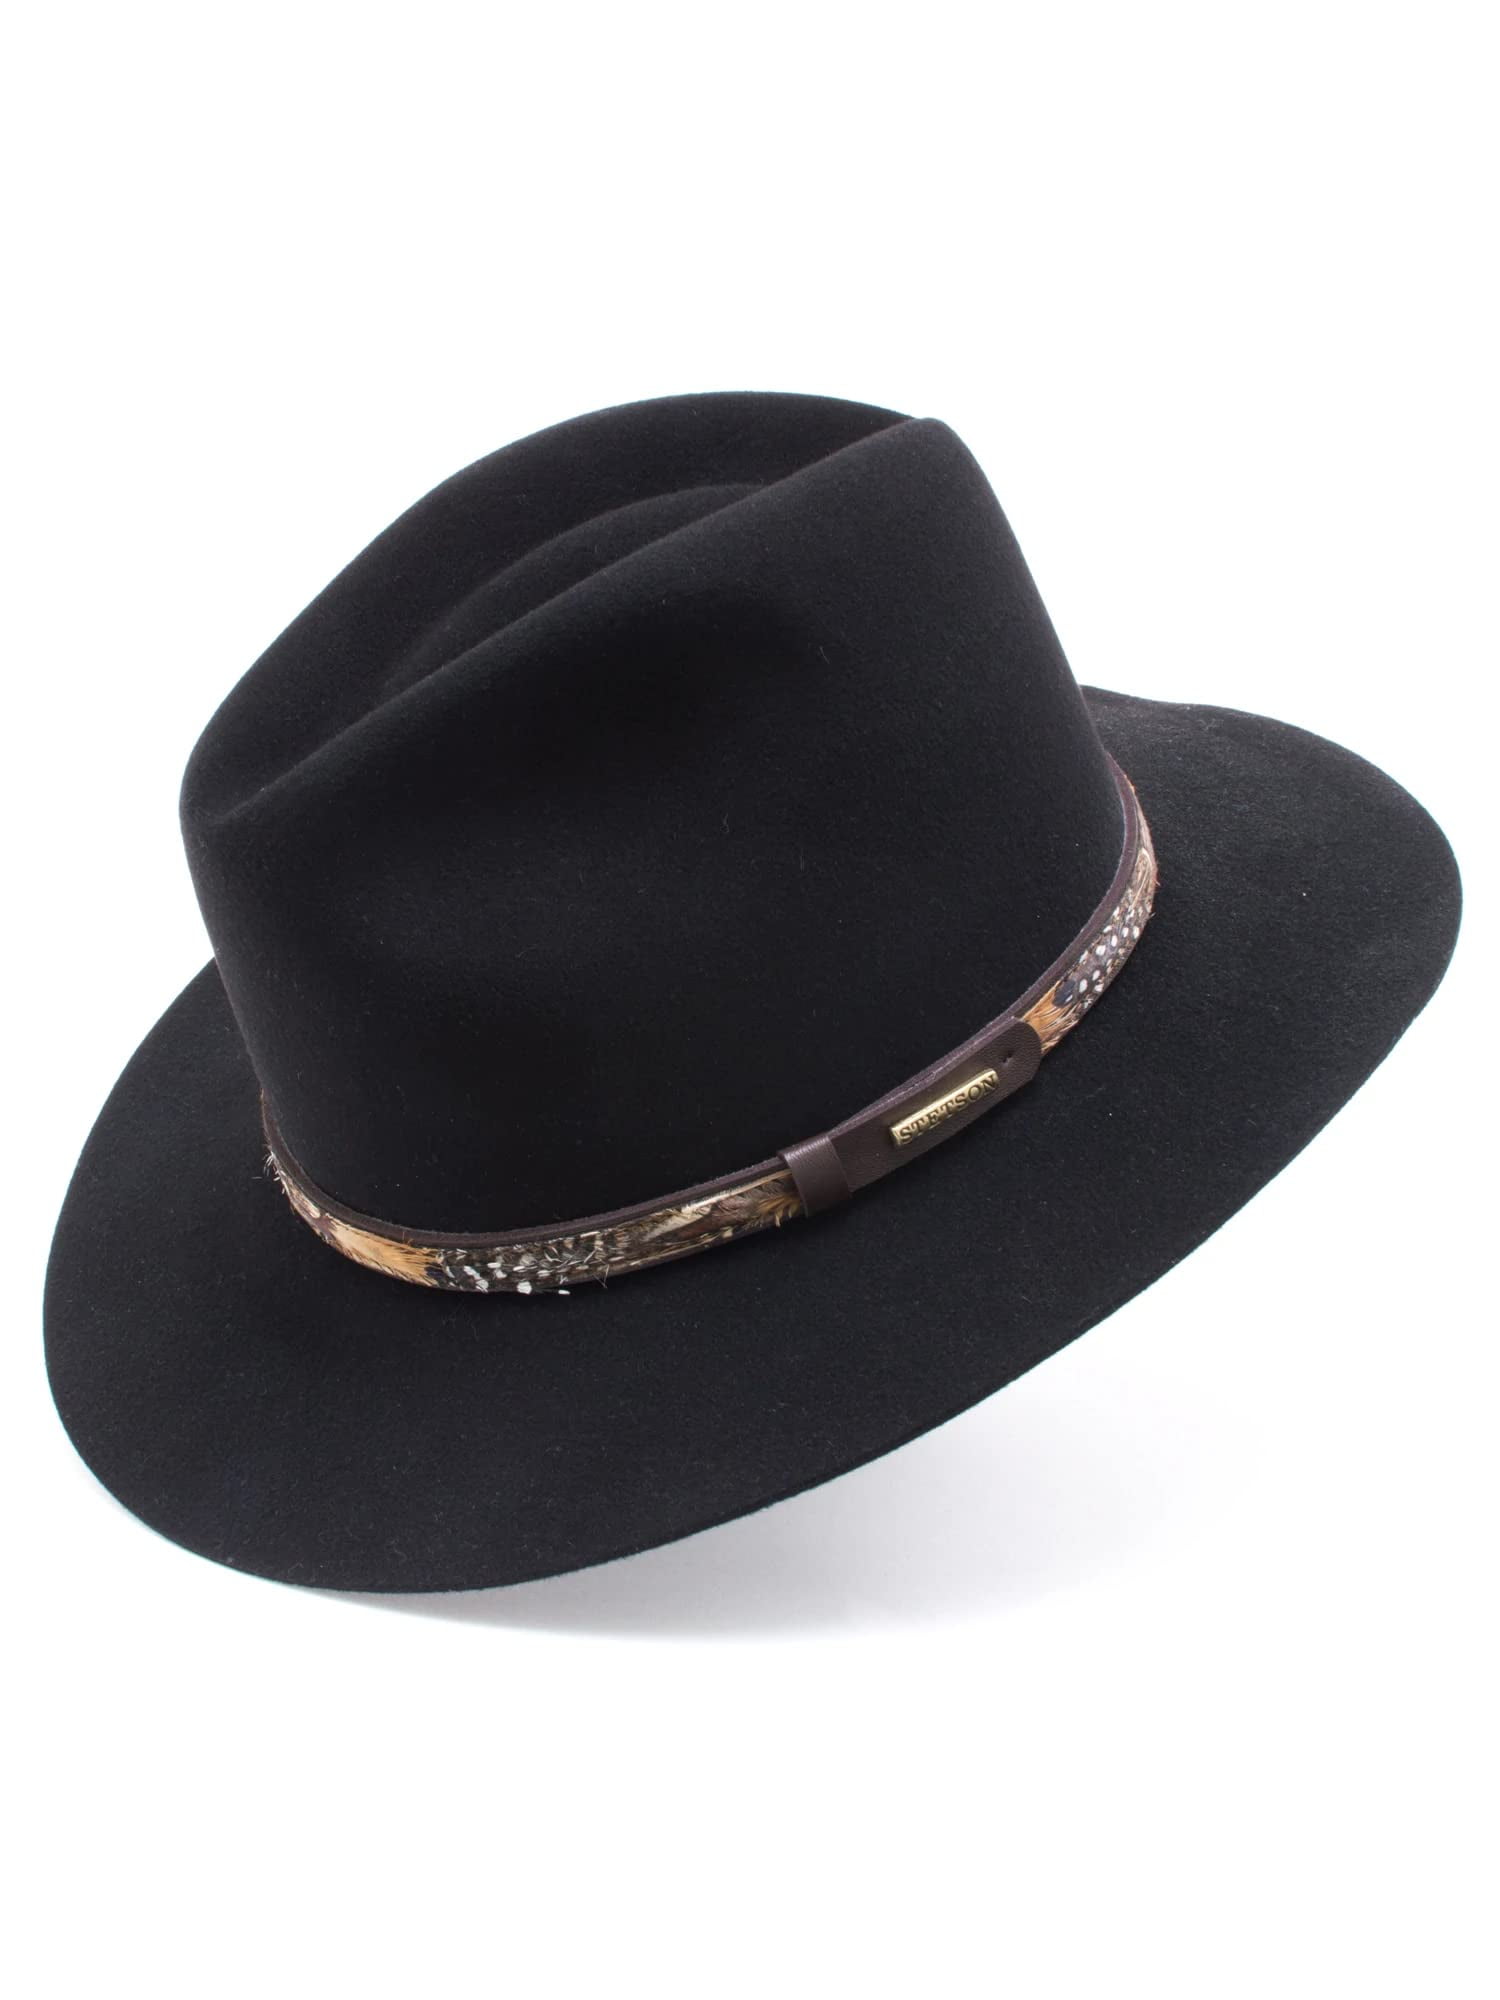 Stetson Men's Jackson Fur Blend Outdoor Hat (Black, Medium) - Walmart.com